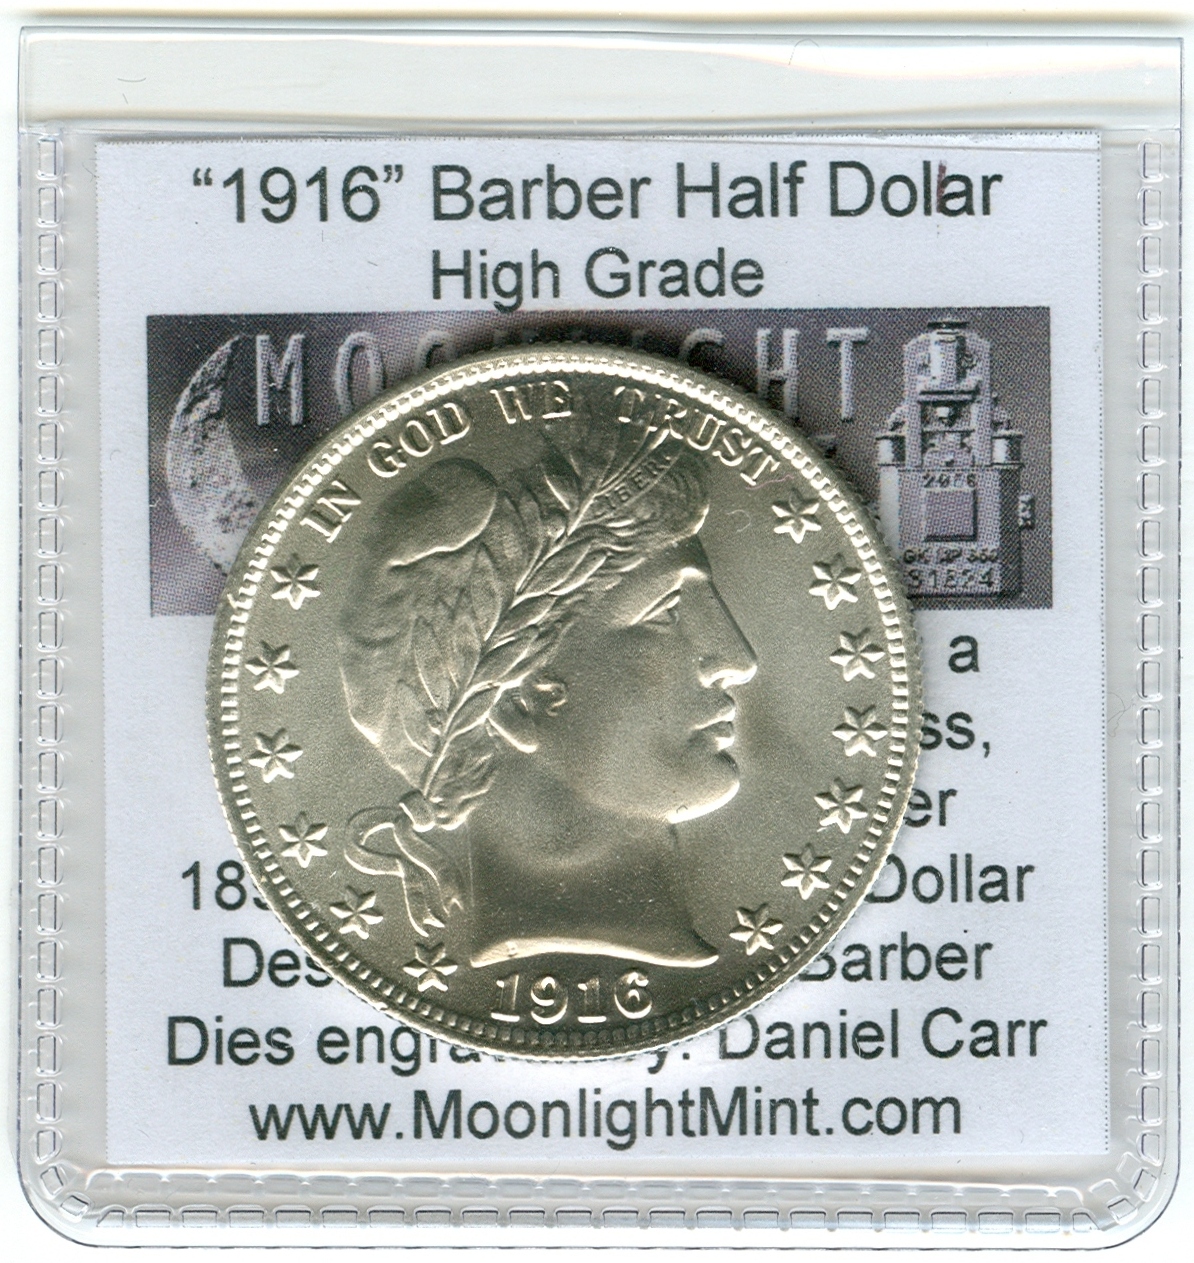 1916 Barber Half Over Strike High Grade Coin and Label.jpg